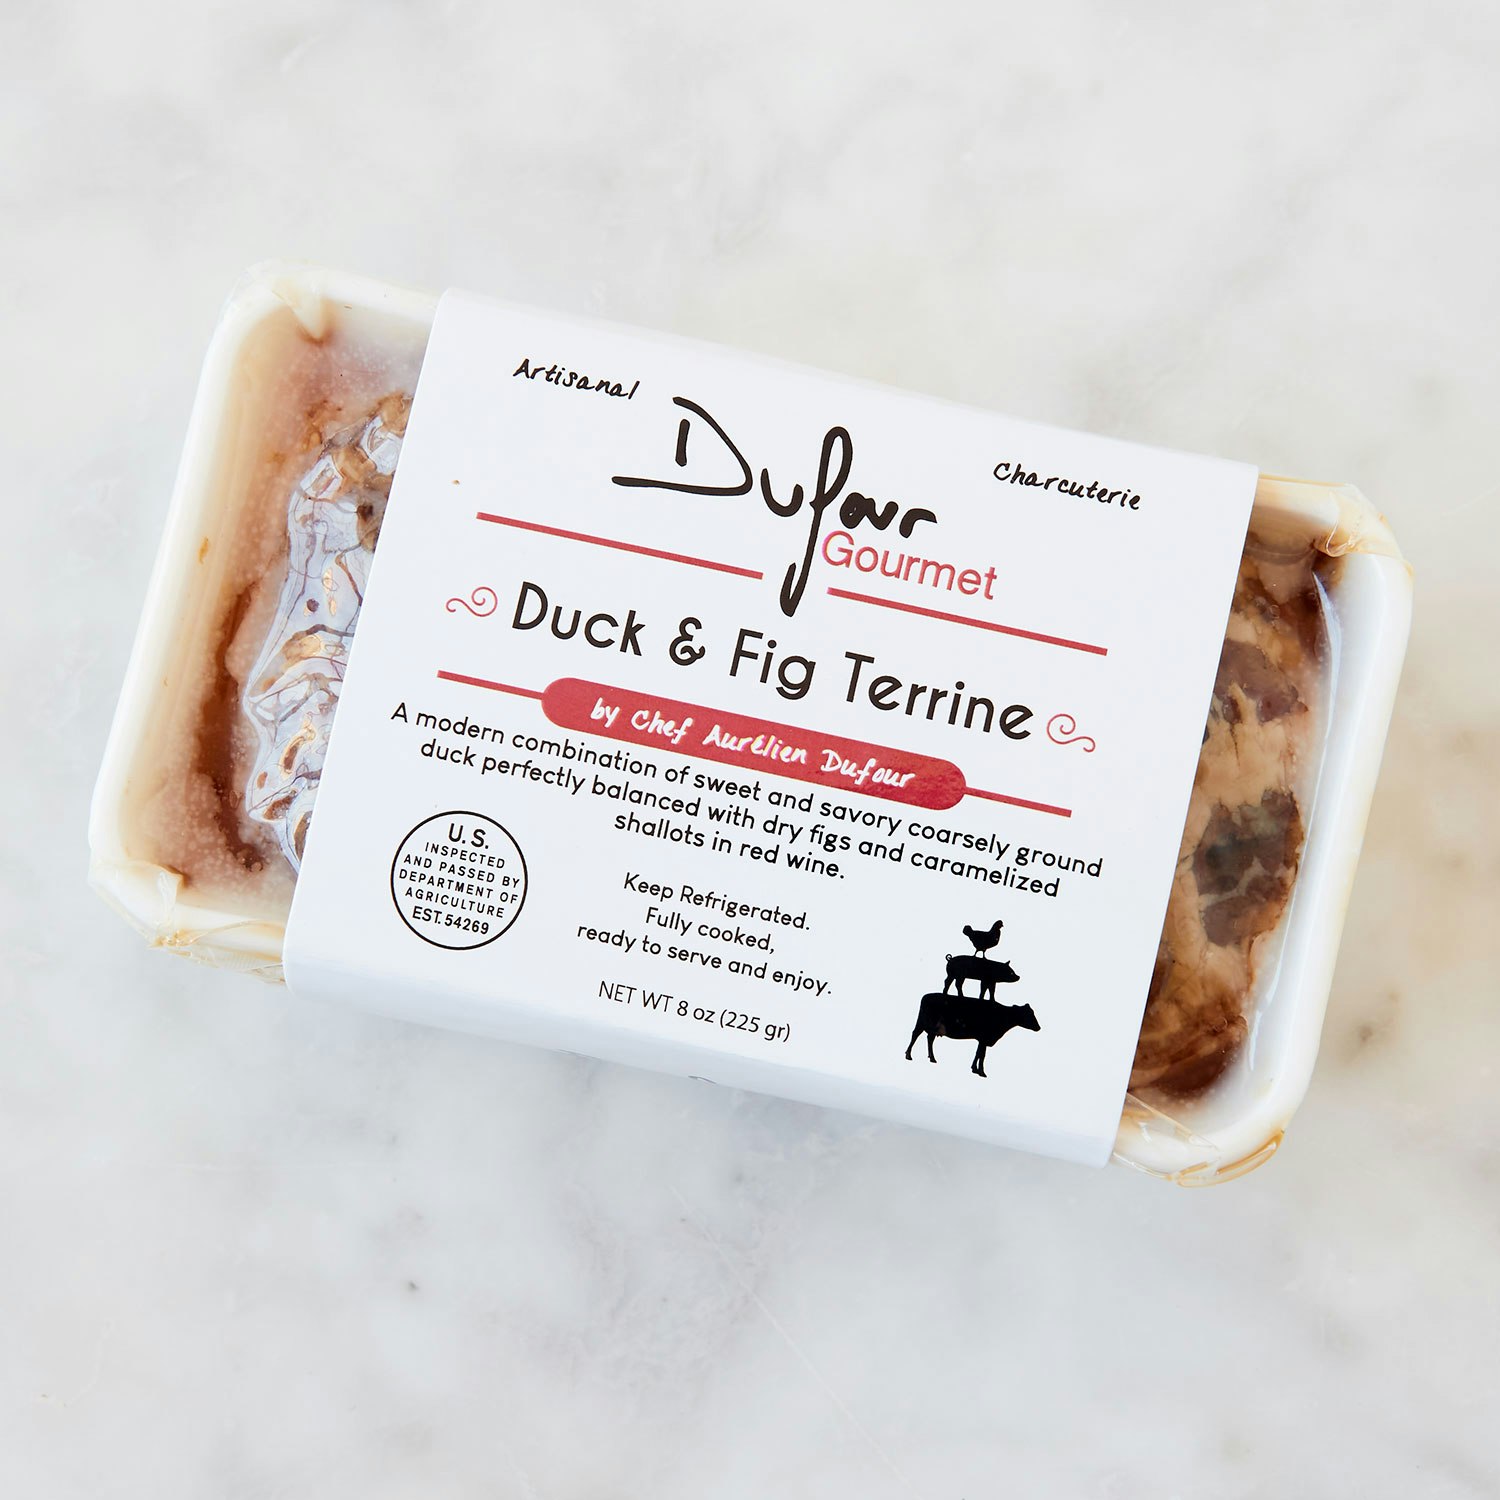 Dufour Gourmet Duck Fig Terrine meats